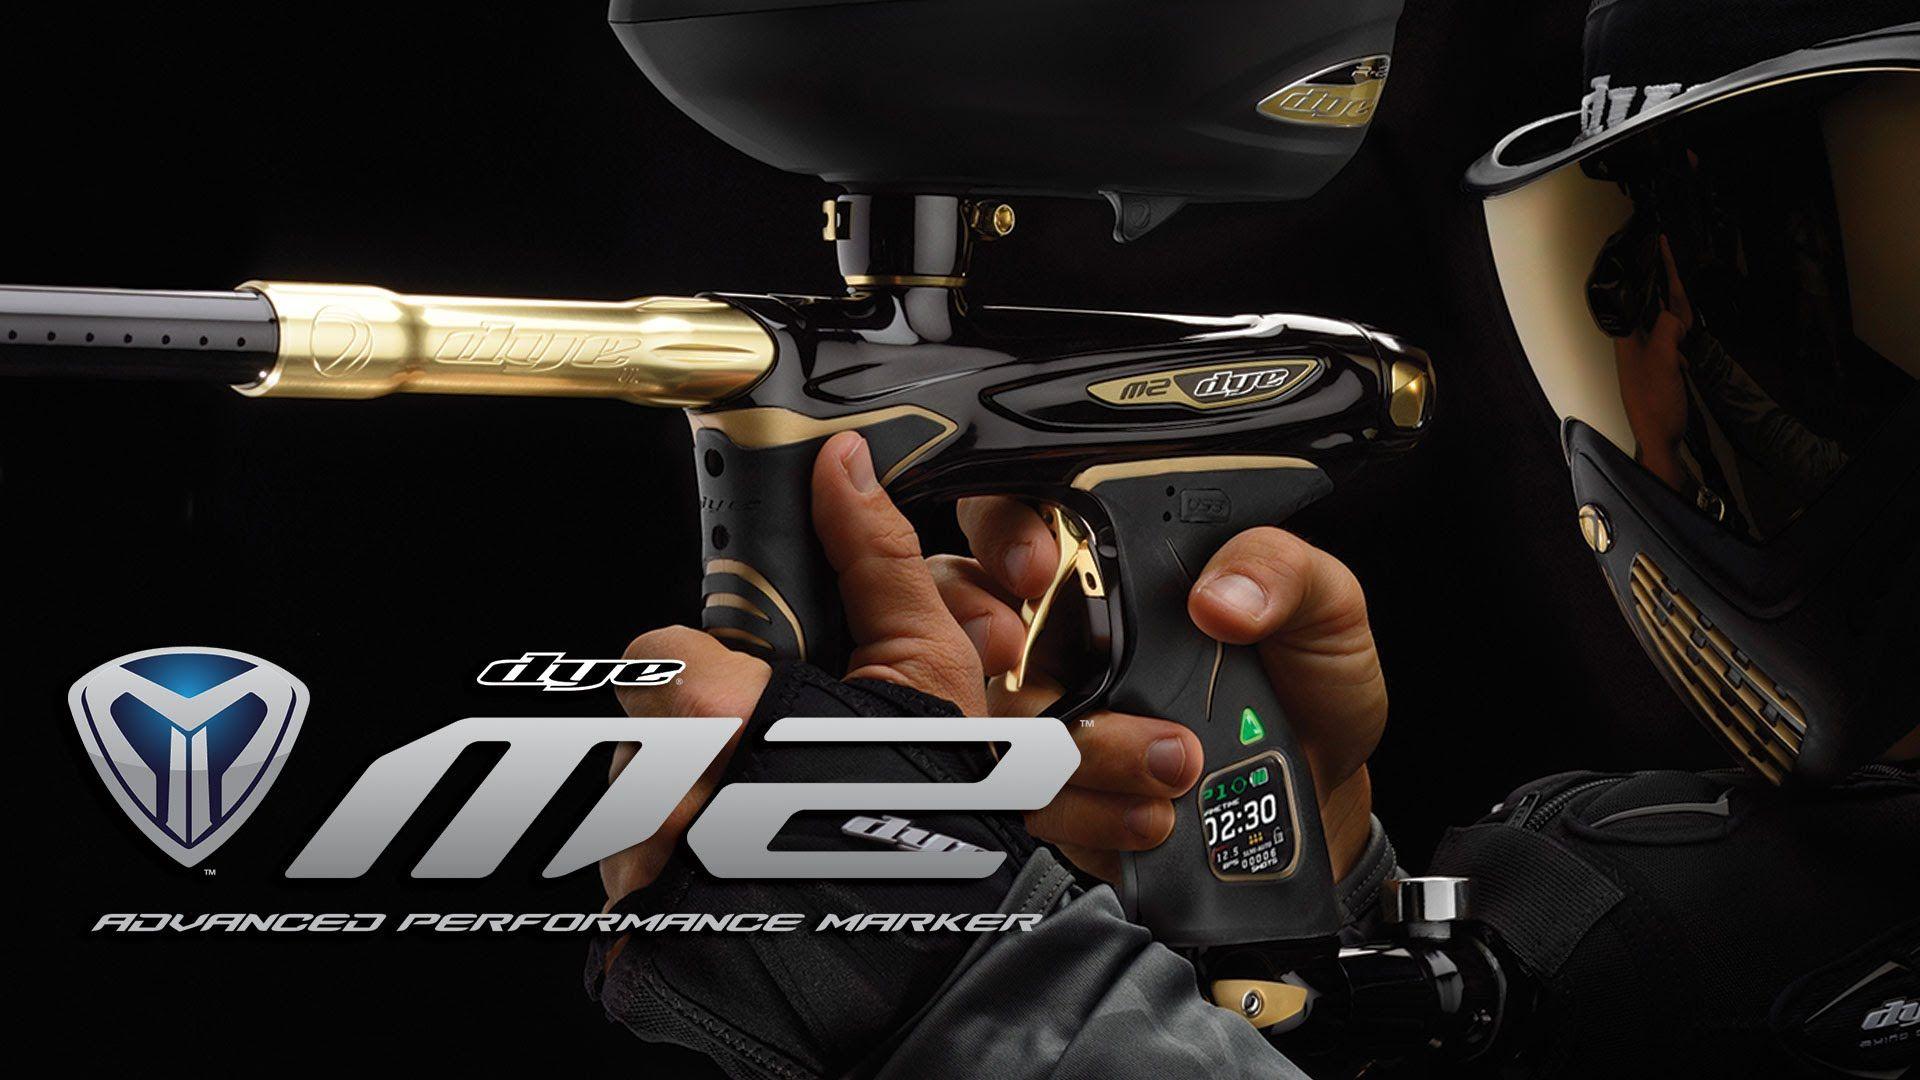 Introducing the new DYE M2 Paintball Gun